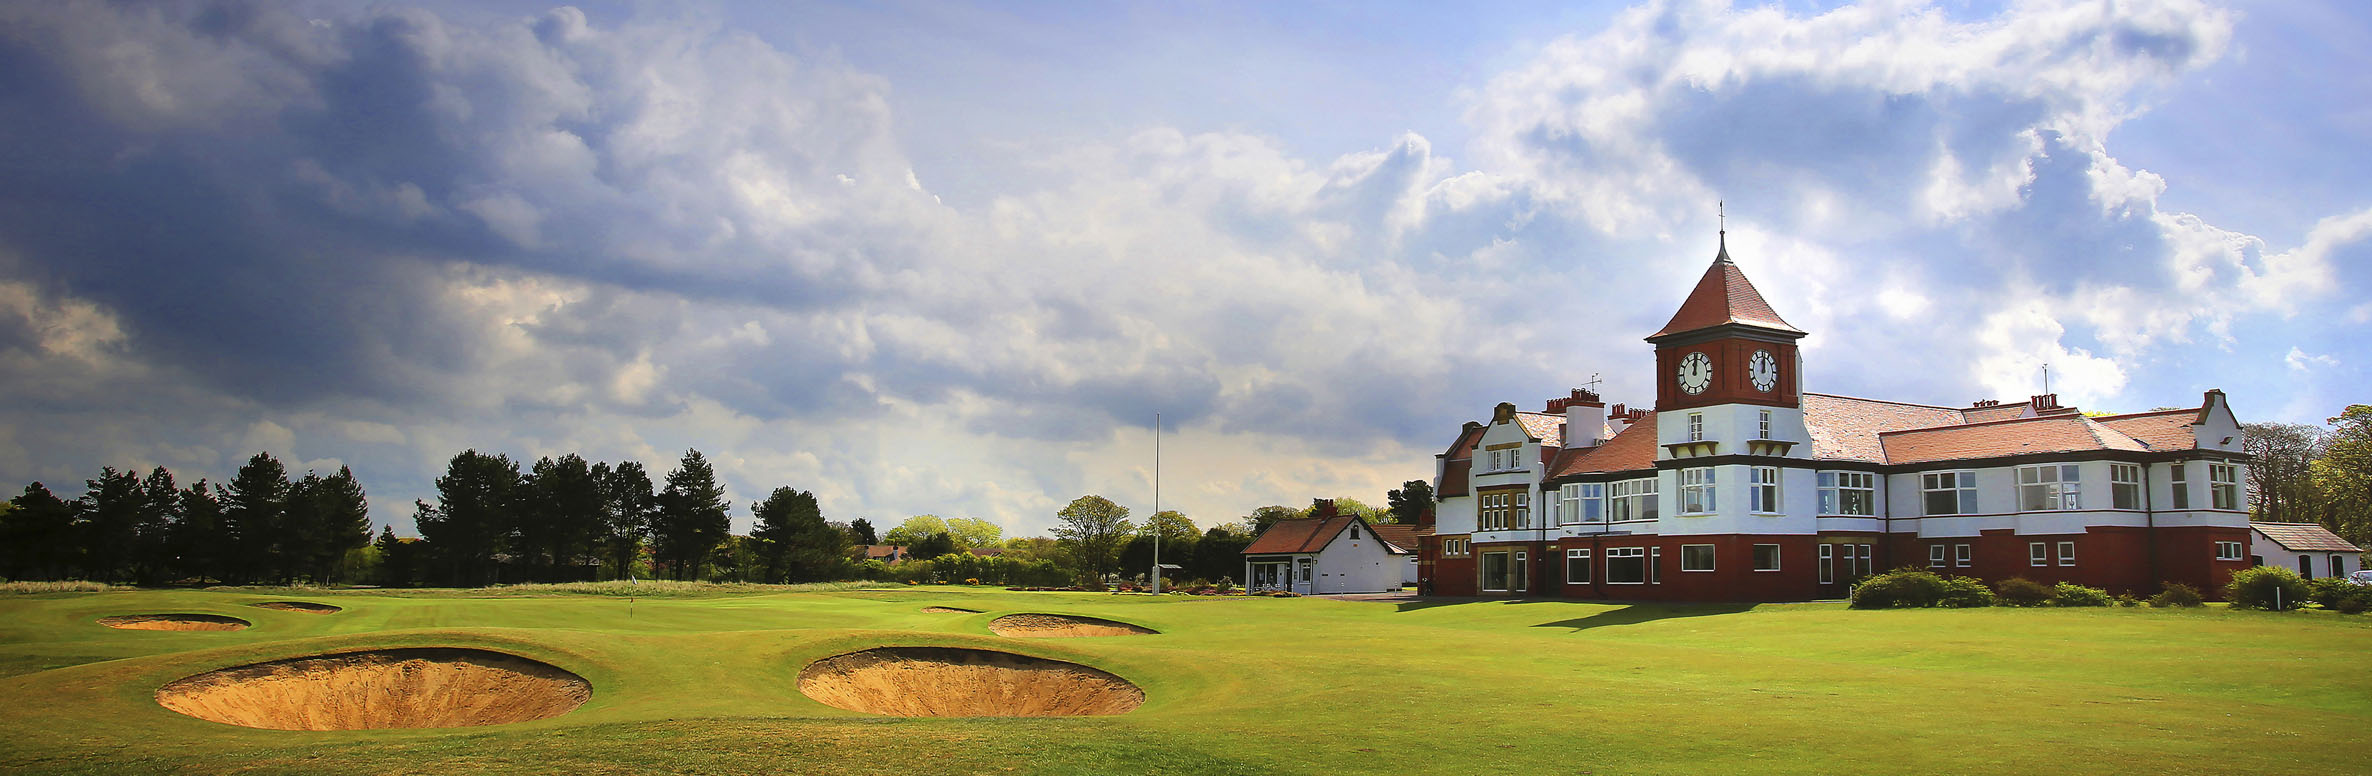 Formby Golf Club No. 18